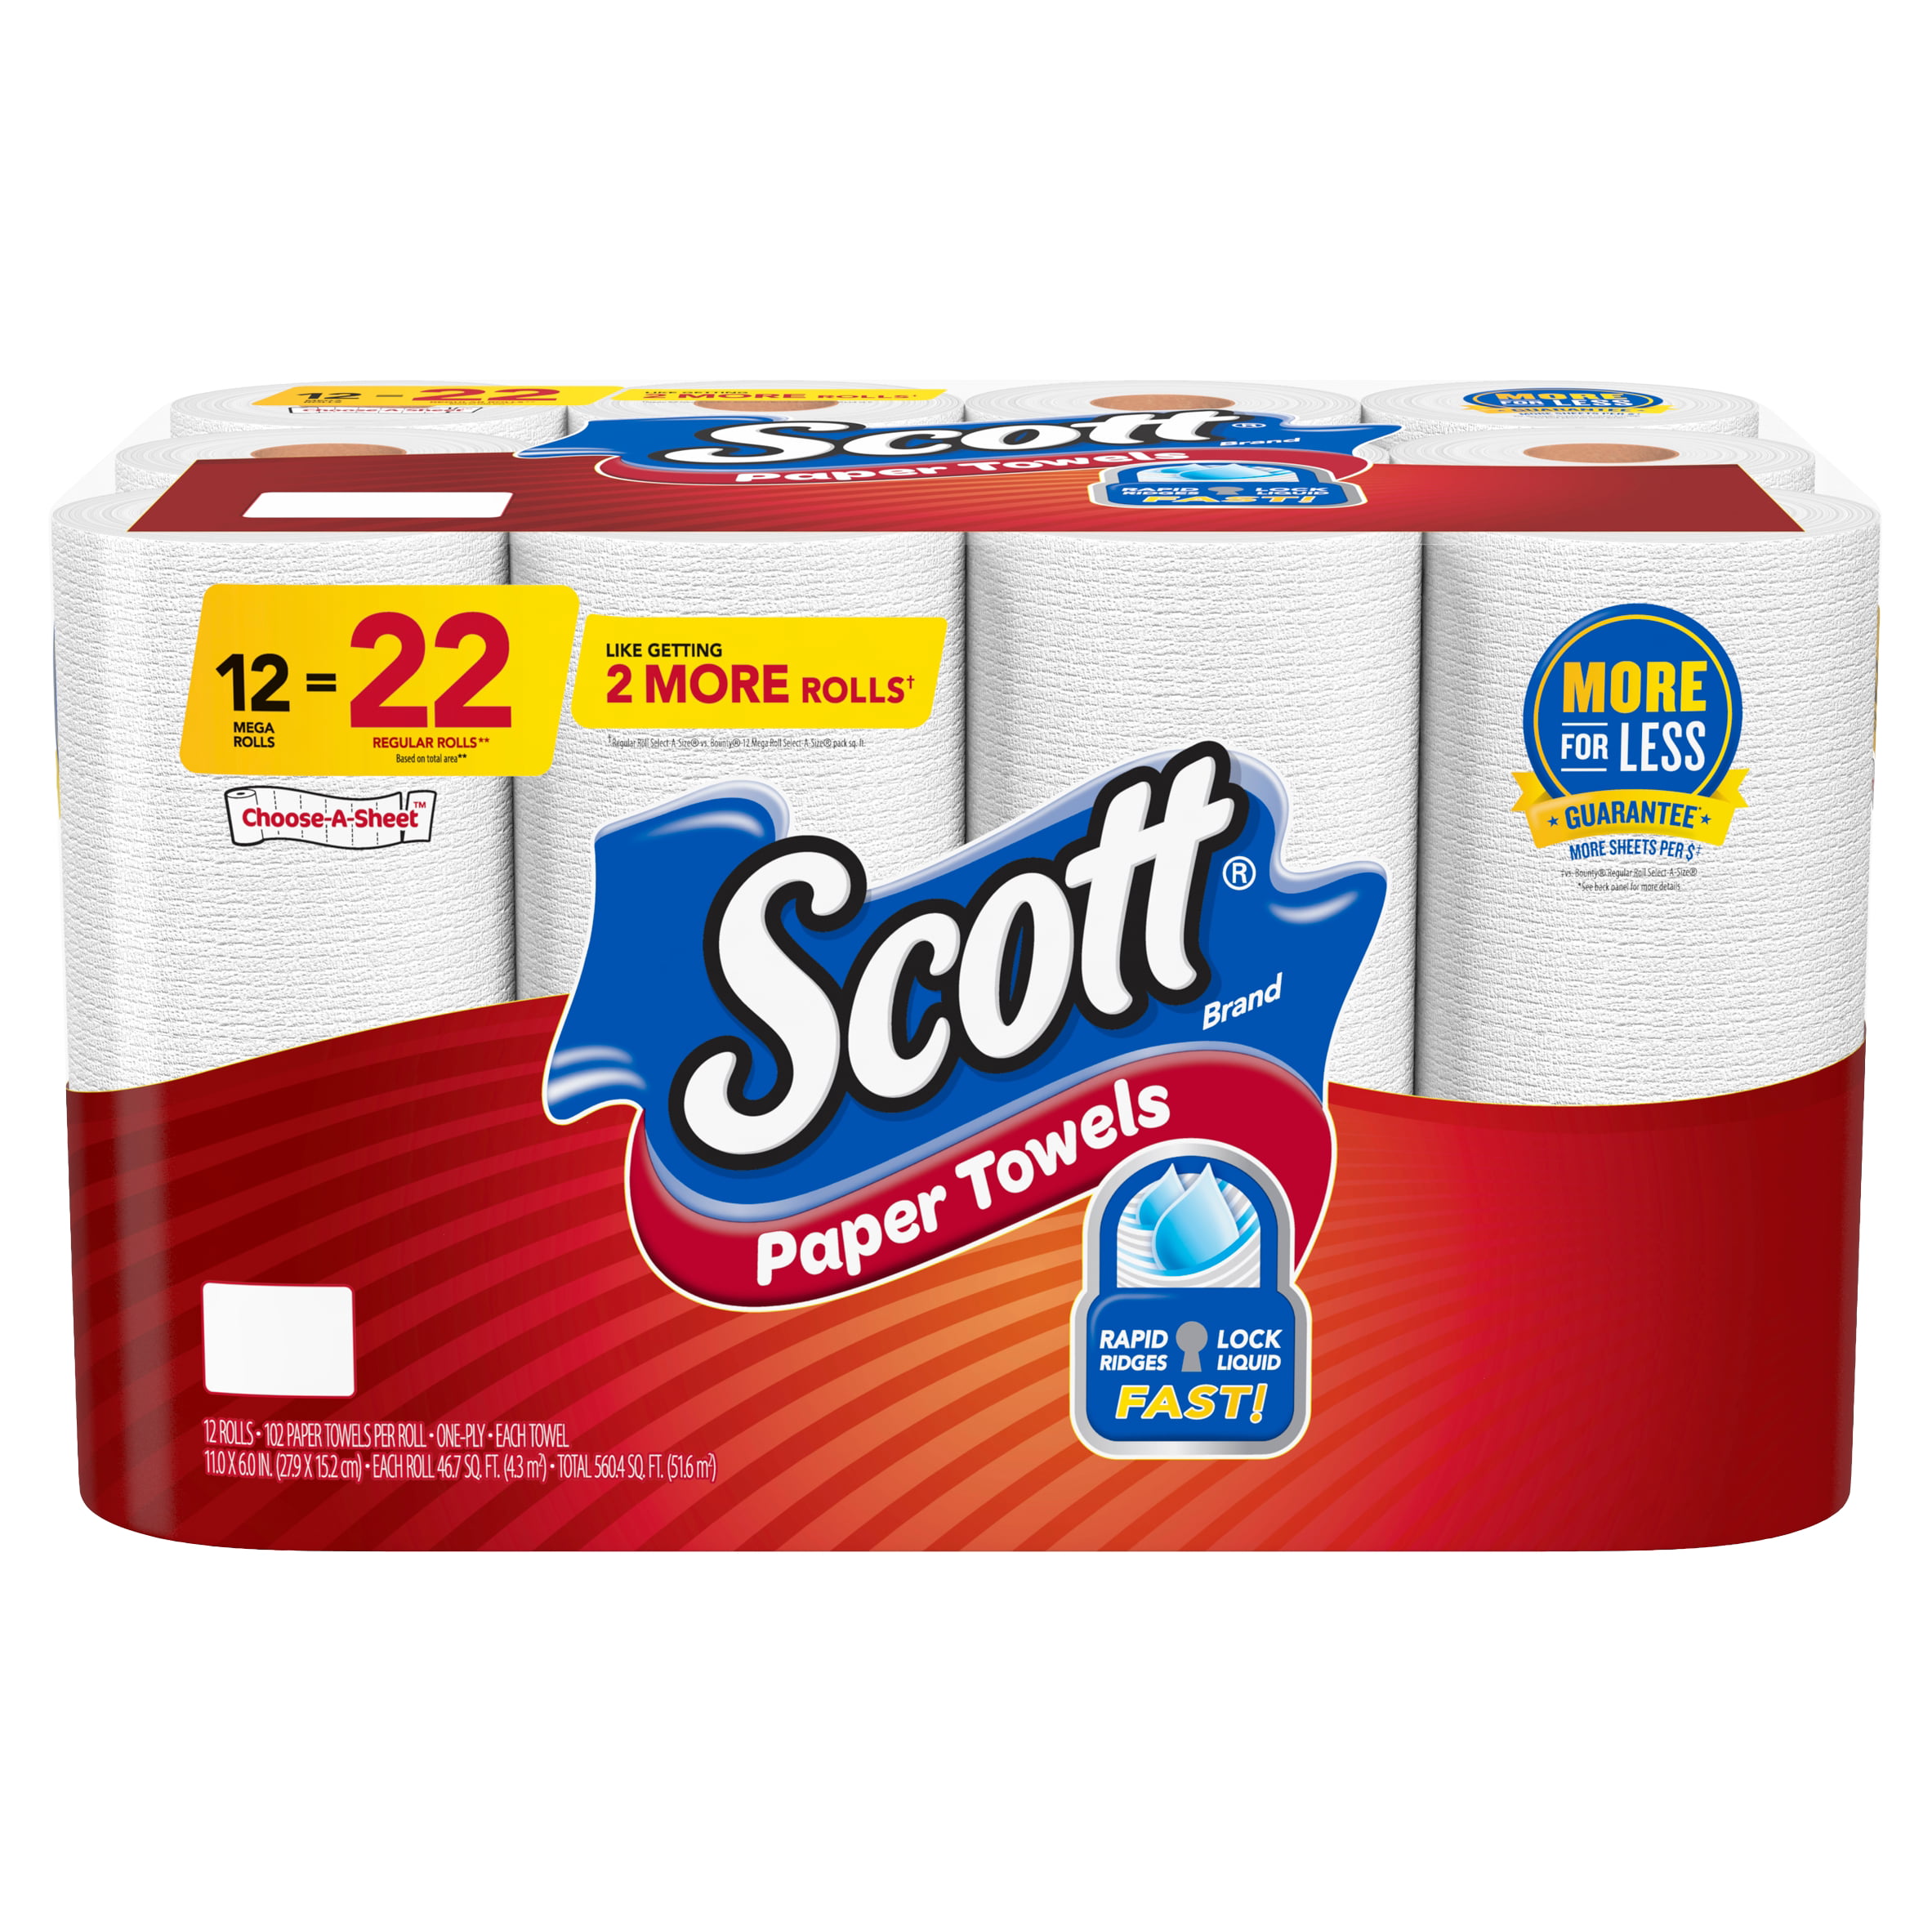 SCOTT Choose-a-sheet Mega Roll Paper Towels White 15 Rolls Pack of 2 for sale online 